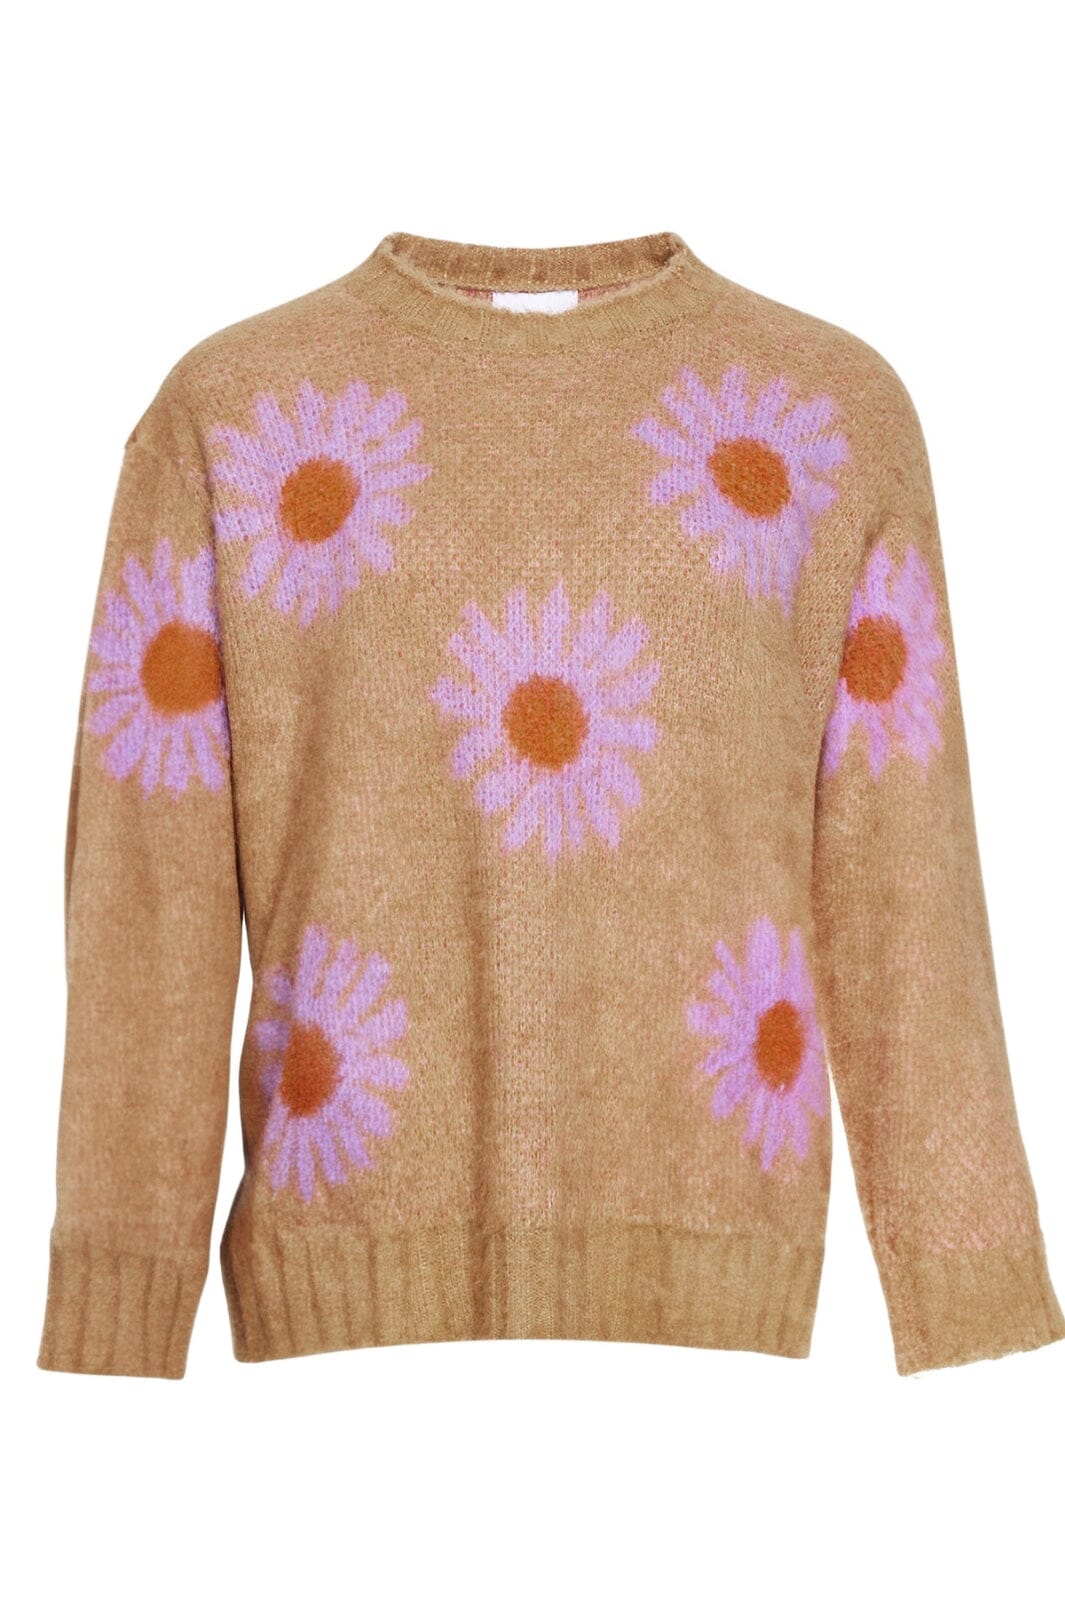 Noella - Raya Knit Sweater L/S - 903 Sand/Lavender Flower Strikbluser 